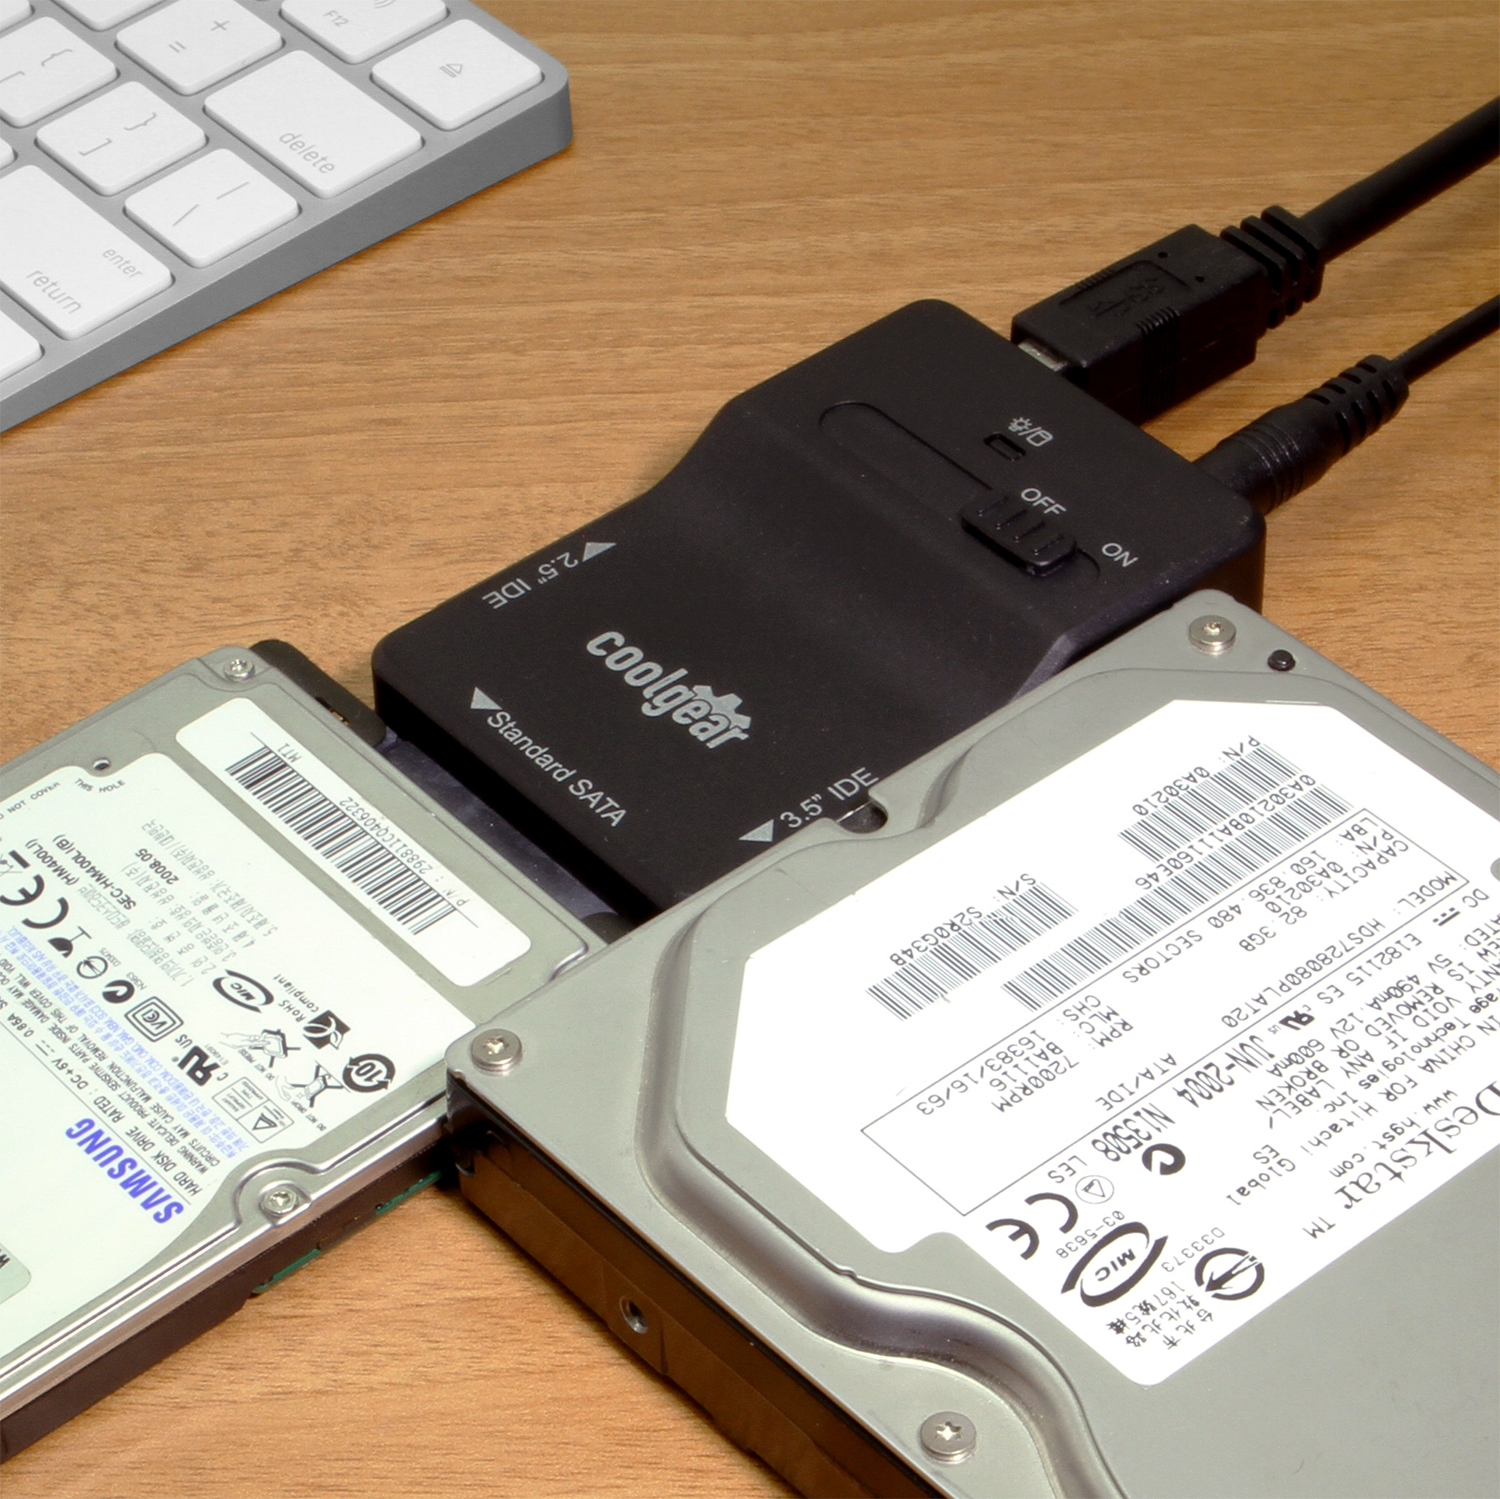 USB3STADA, i-tec USB 3.0 pour adaptateur SATA III